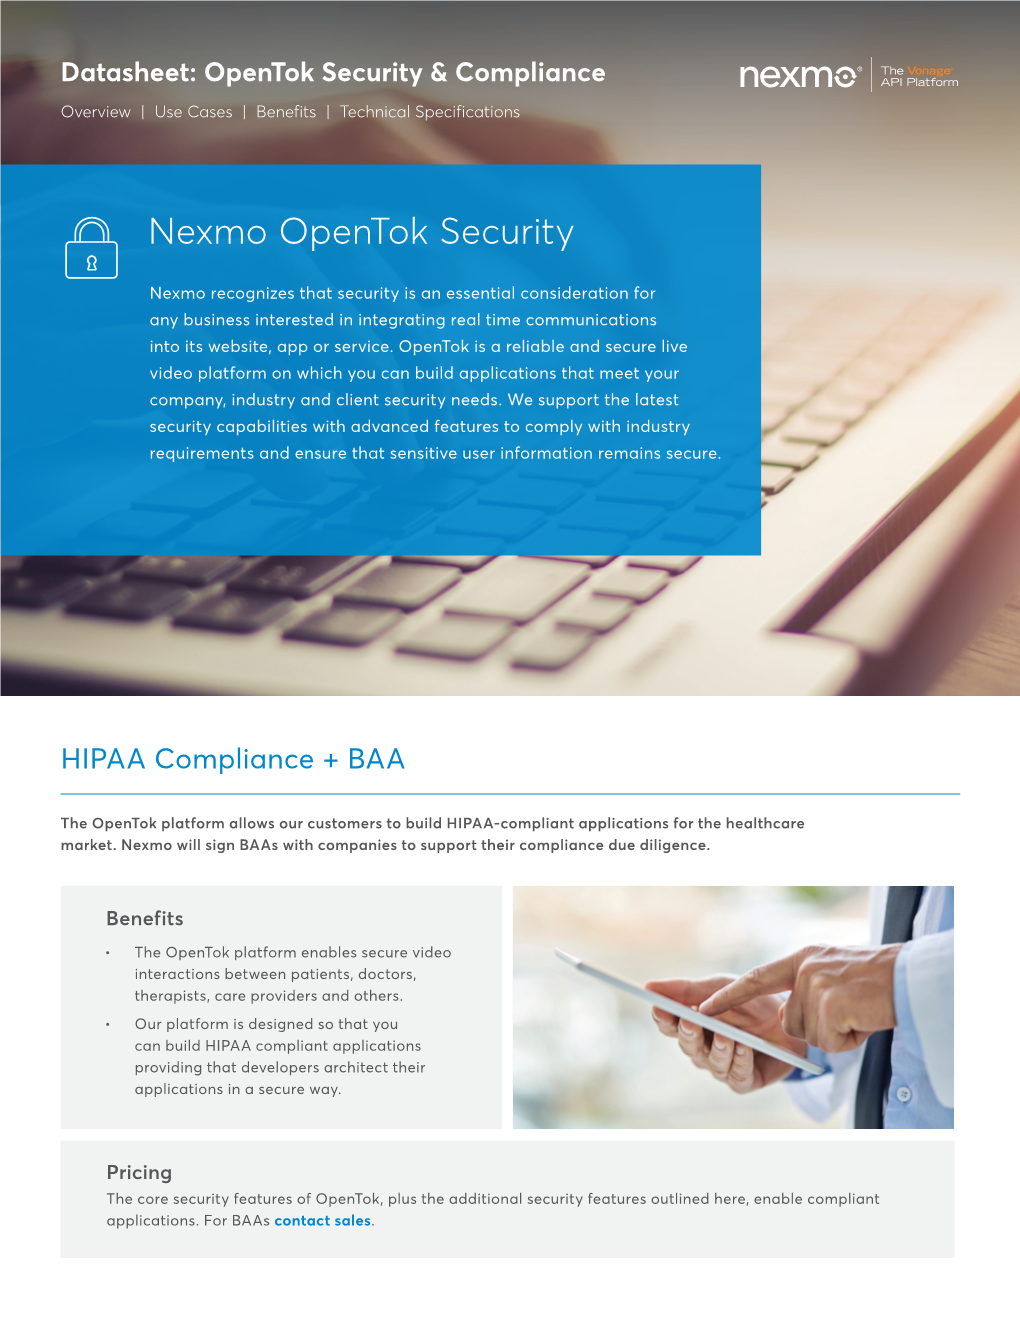 Nexmo Opentok Security